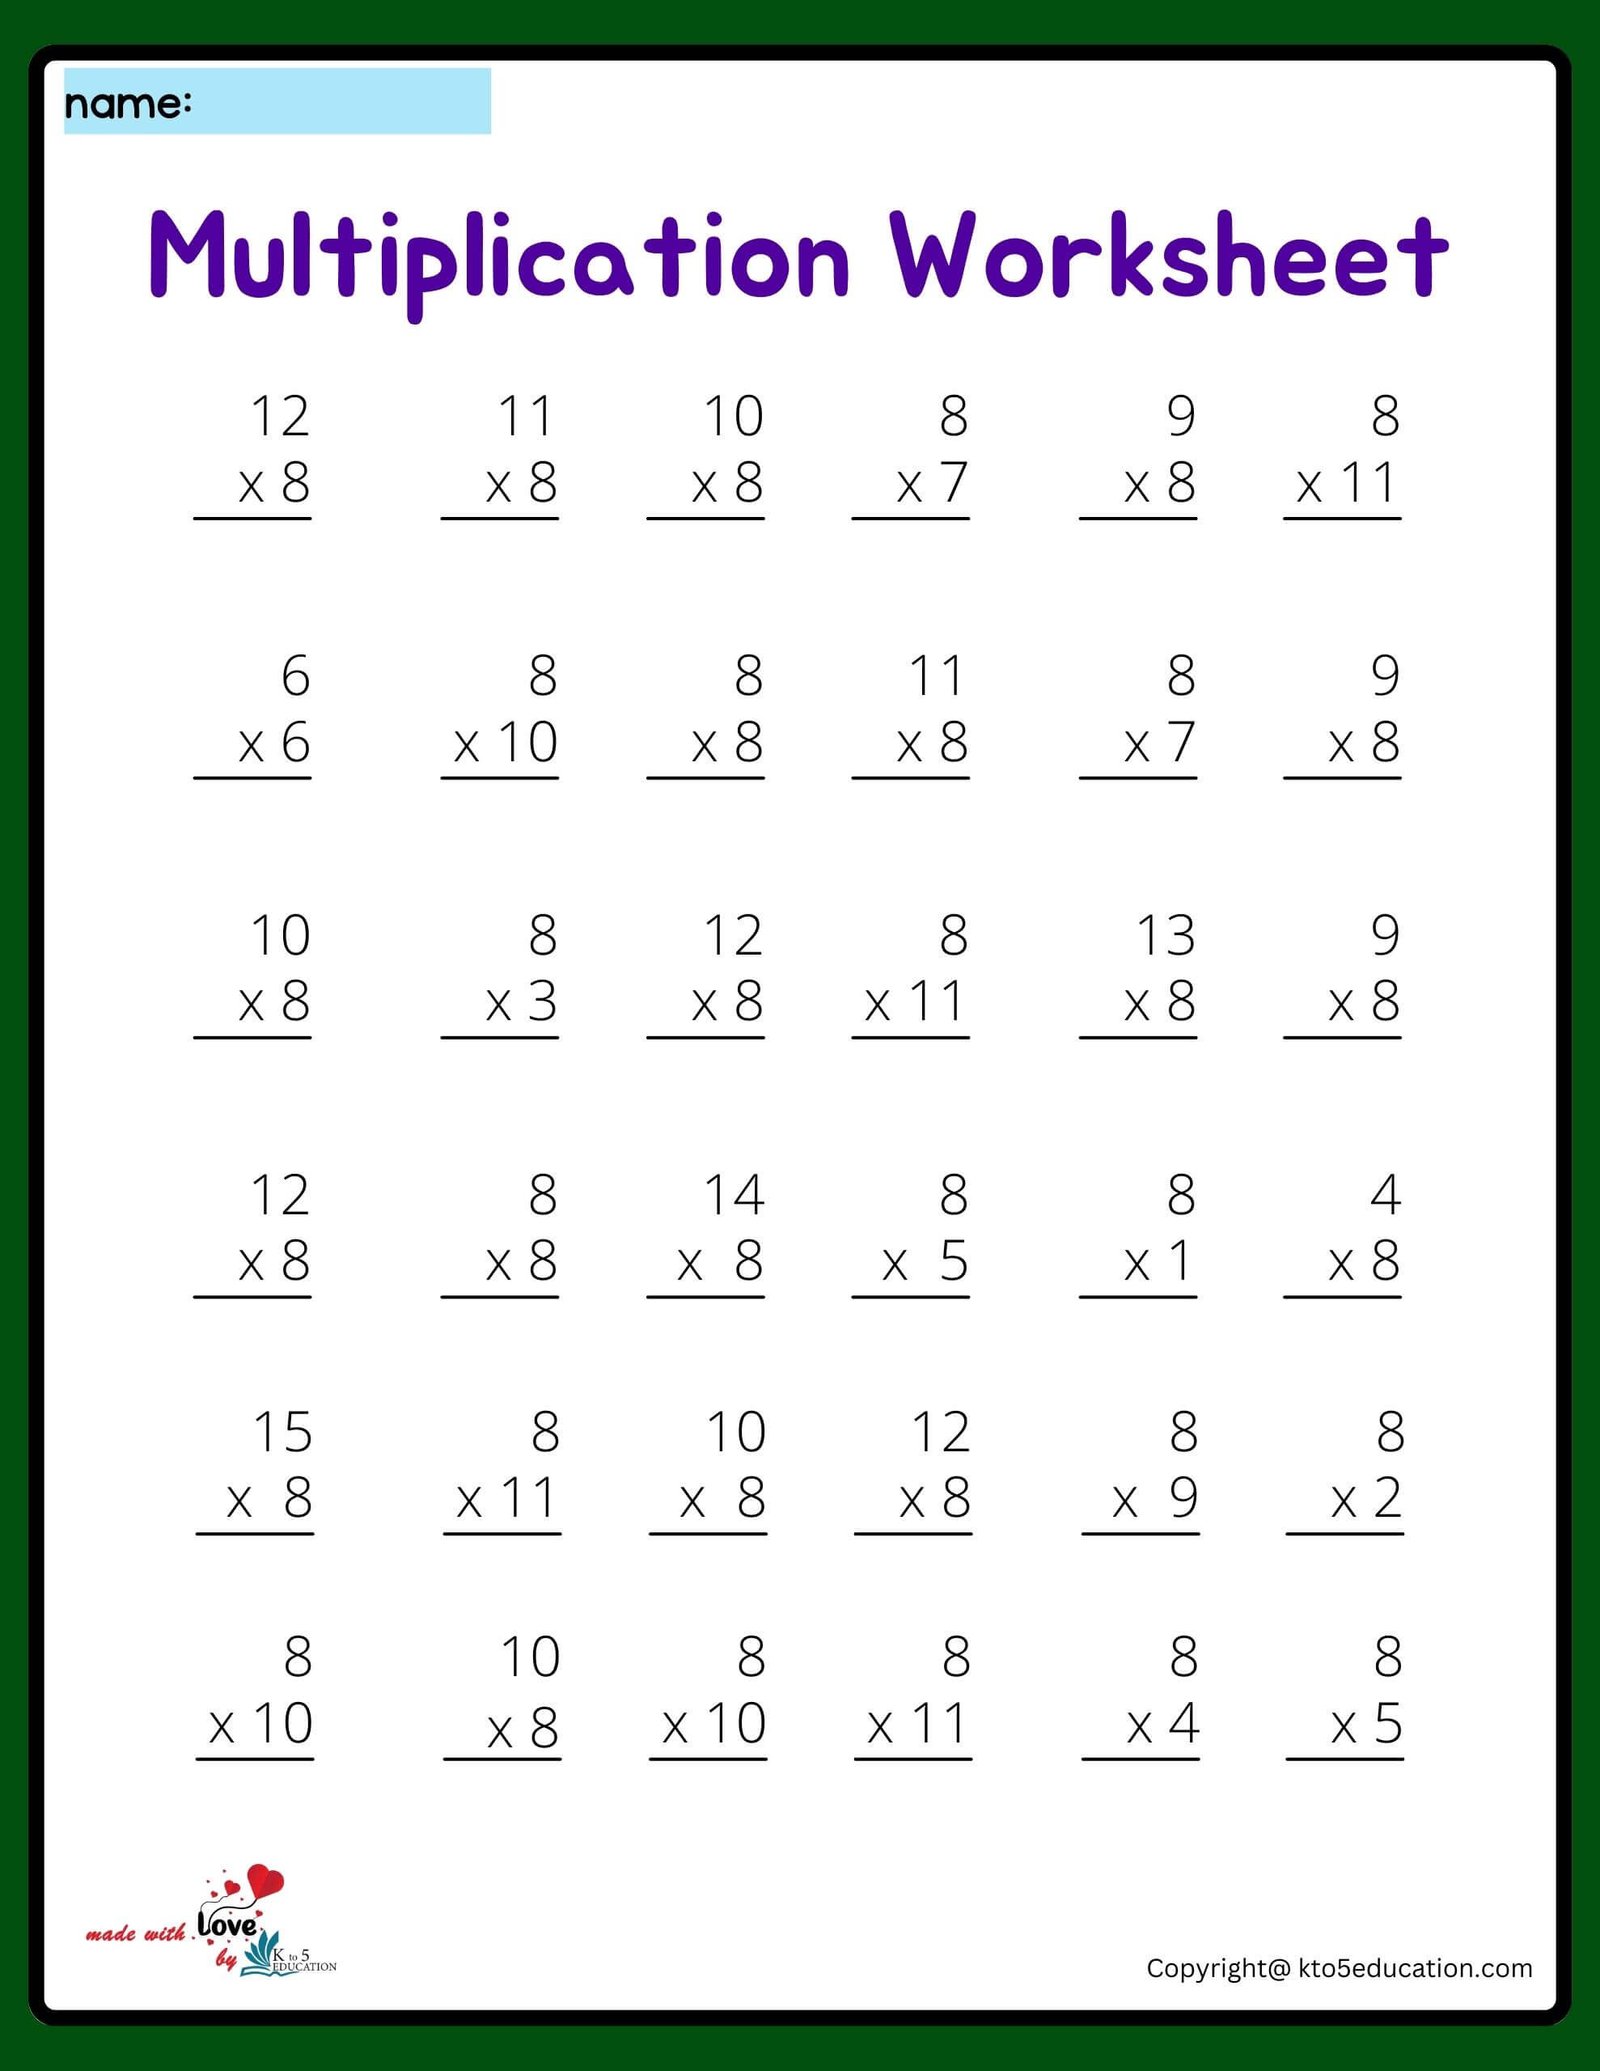 6x6 Multiplication Worksheet